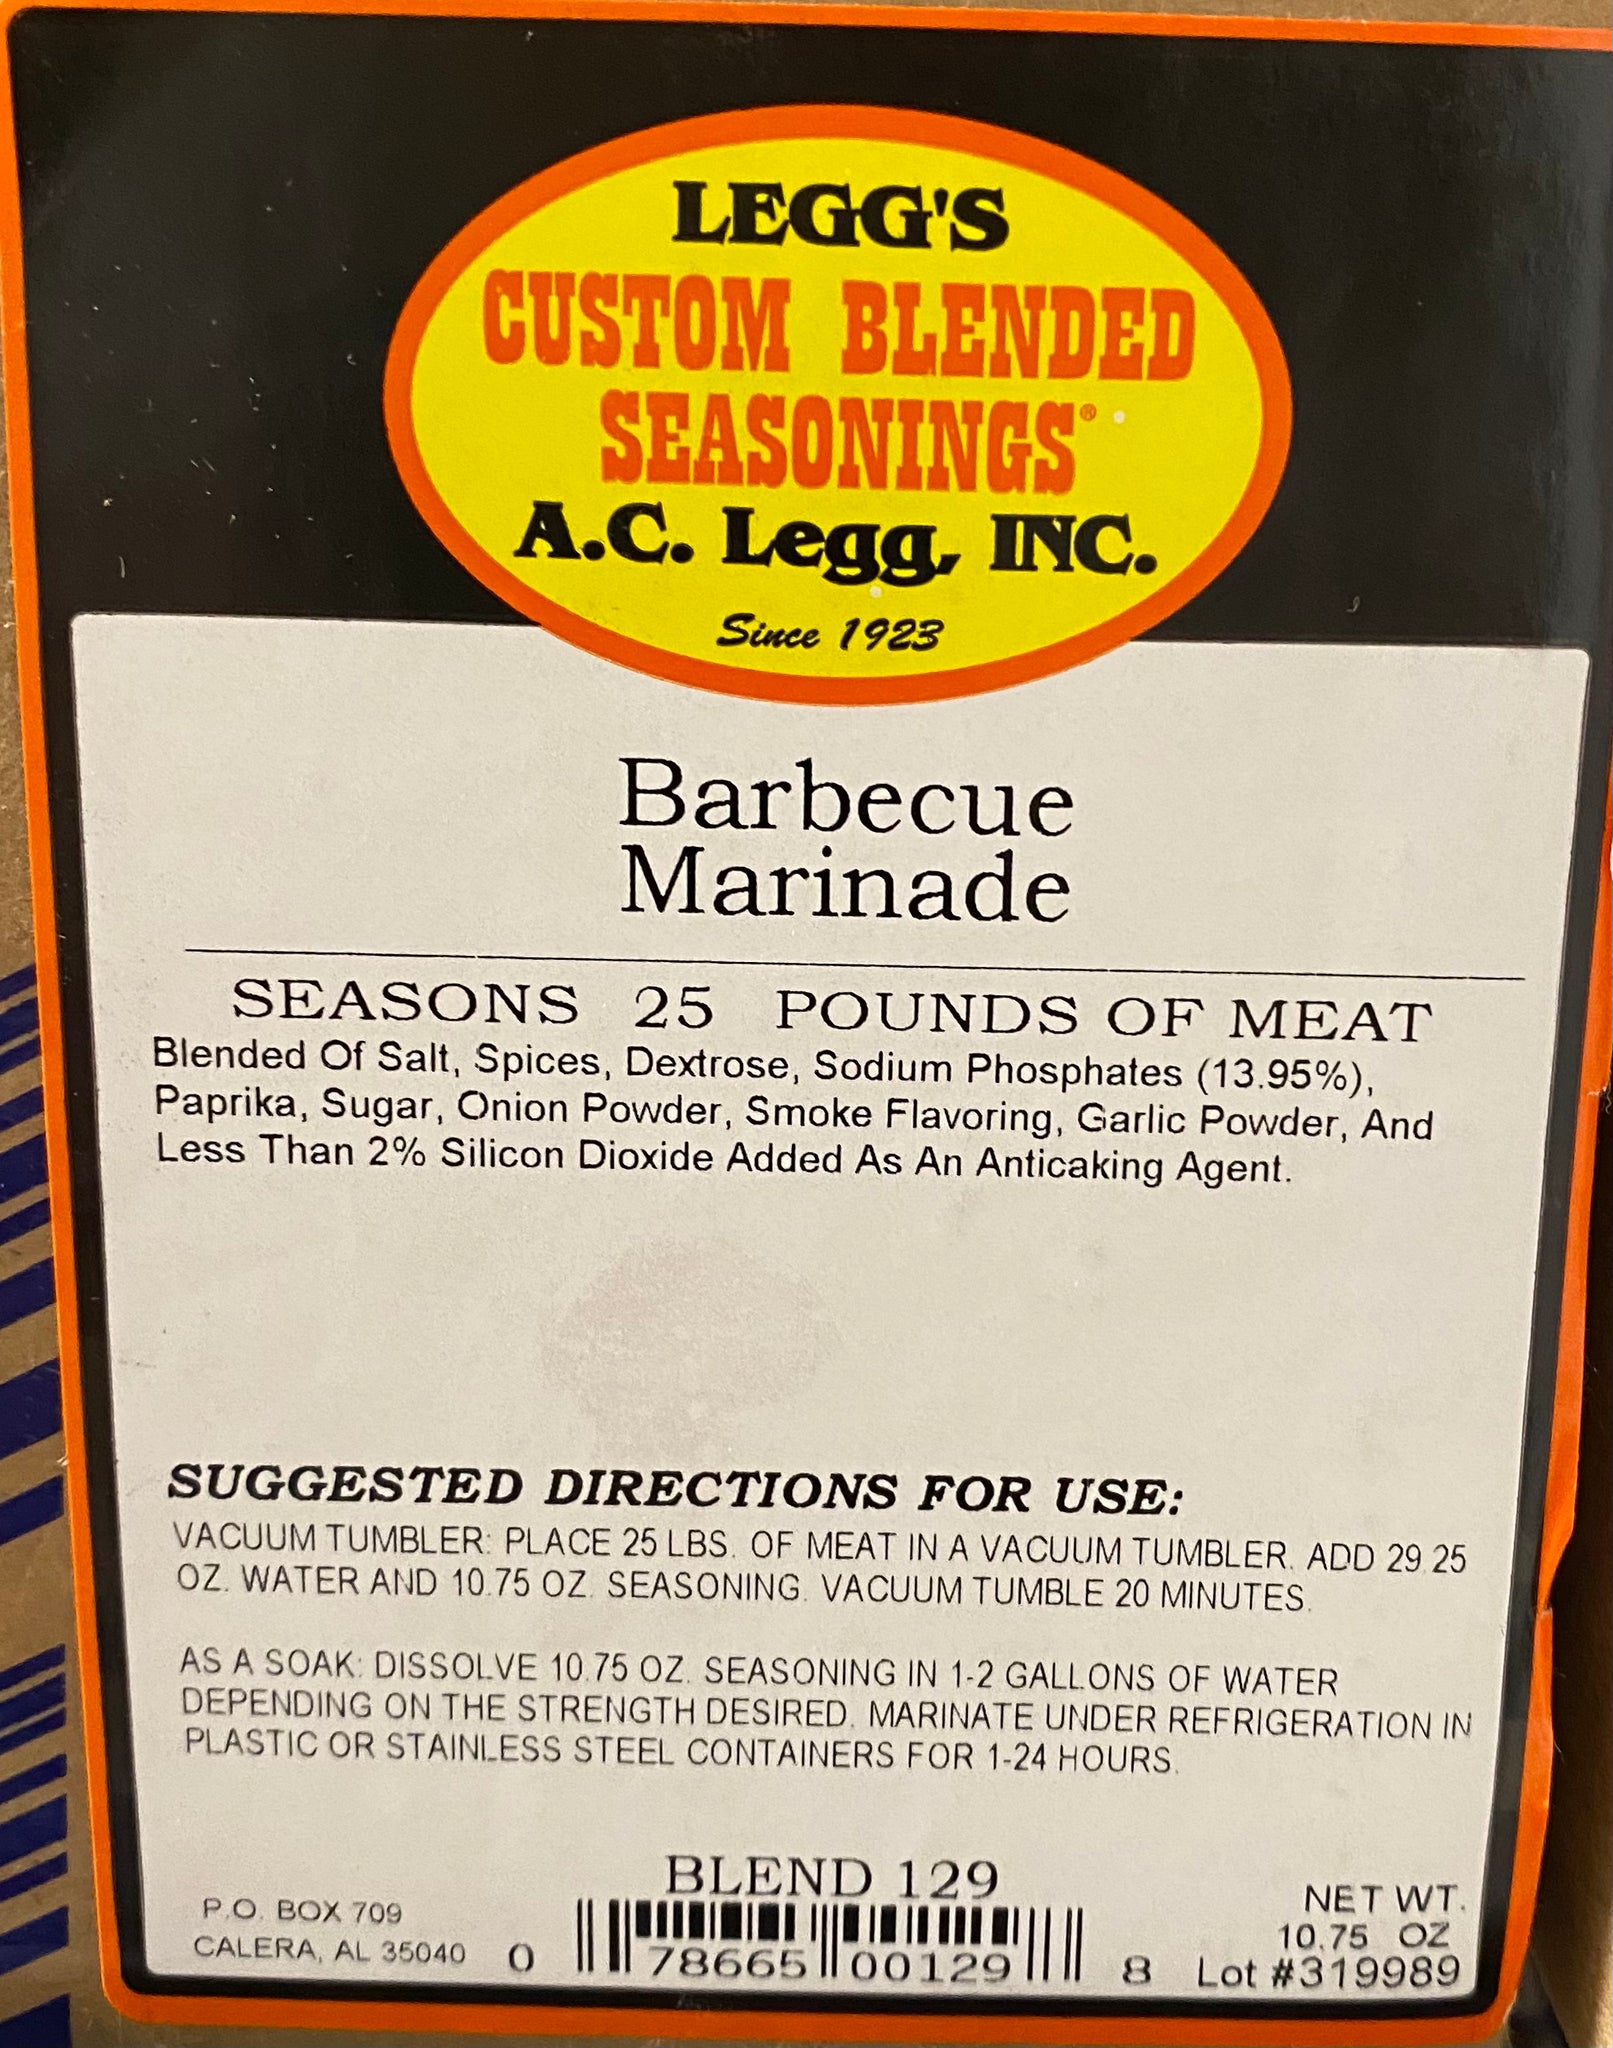 A.C. Legg Barbecue Marinade Blend #129